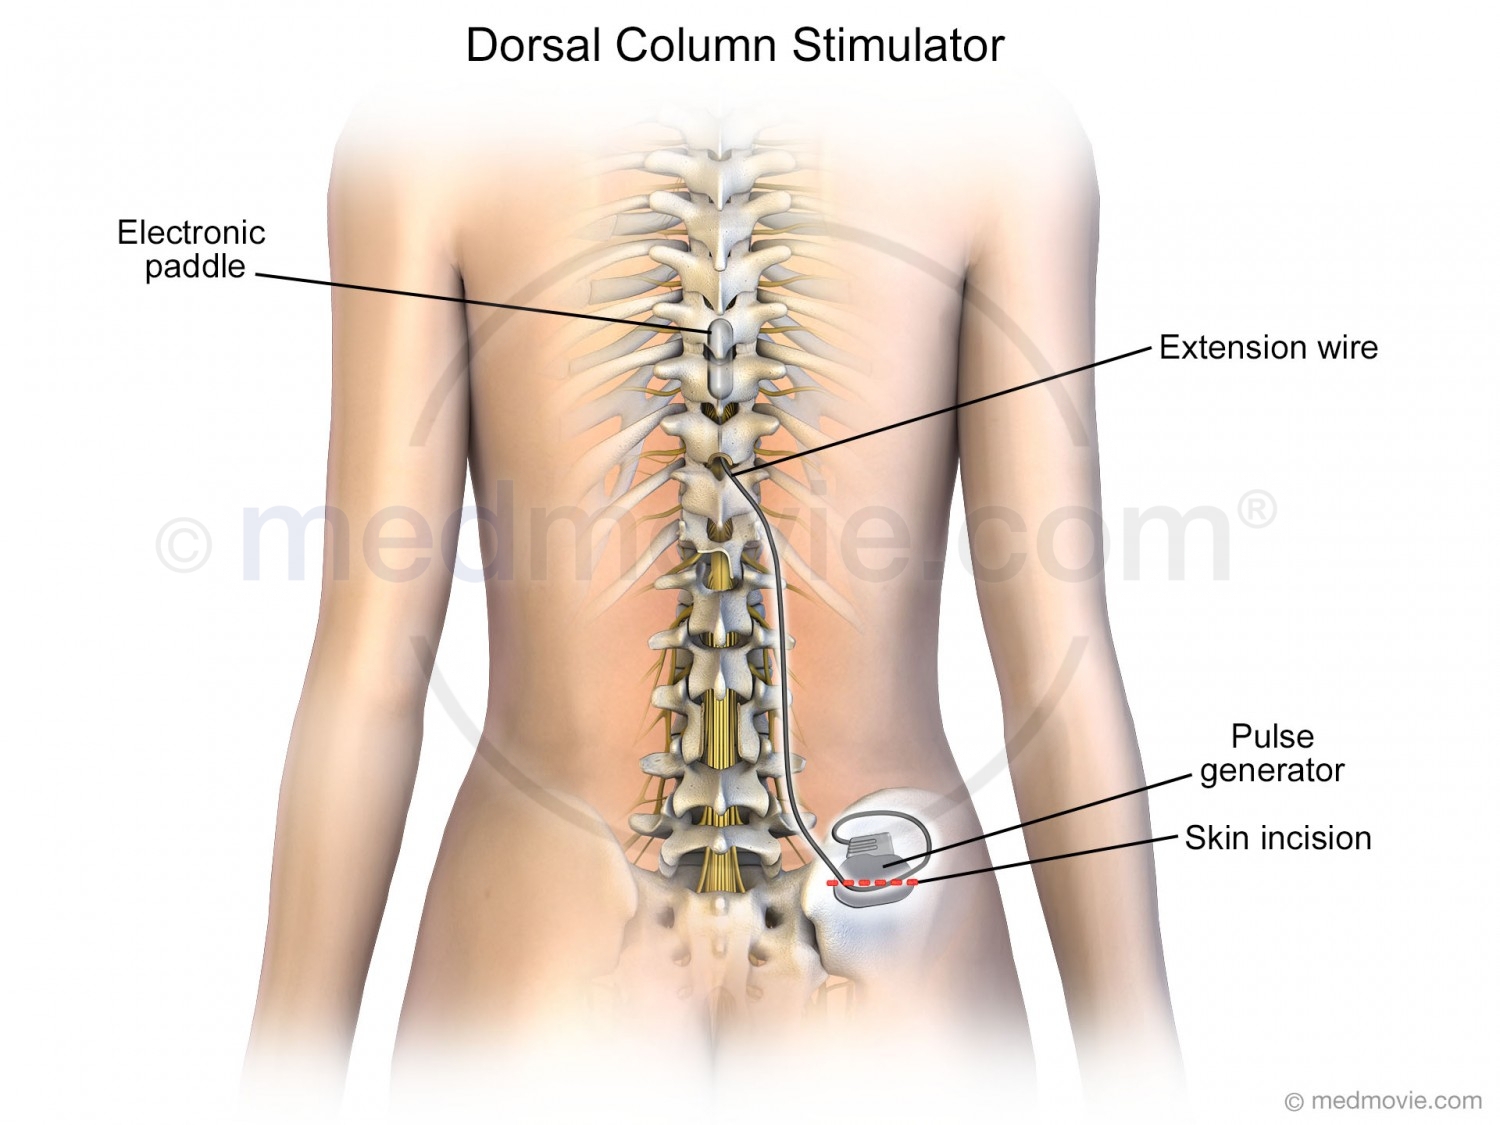 dorsal column stimulator paddle placement